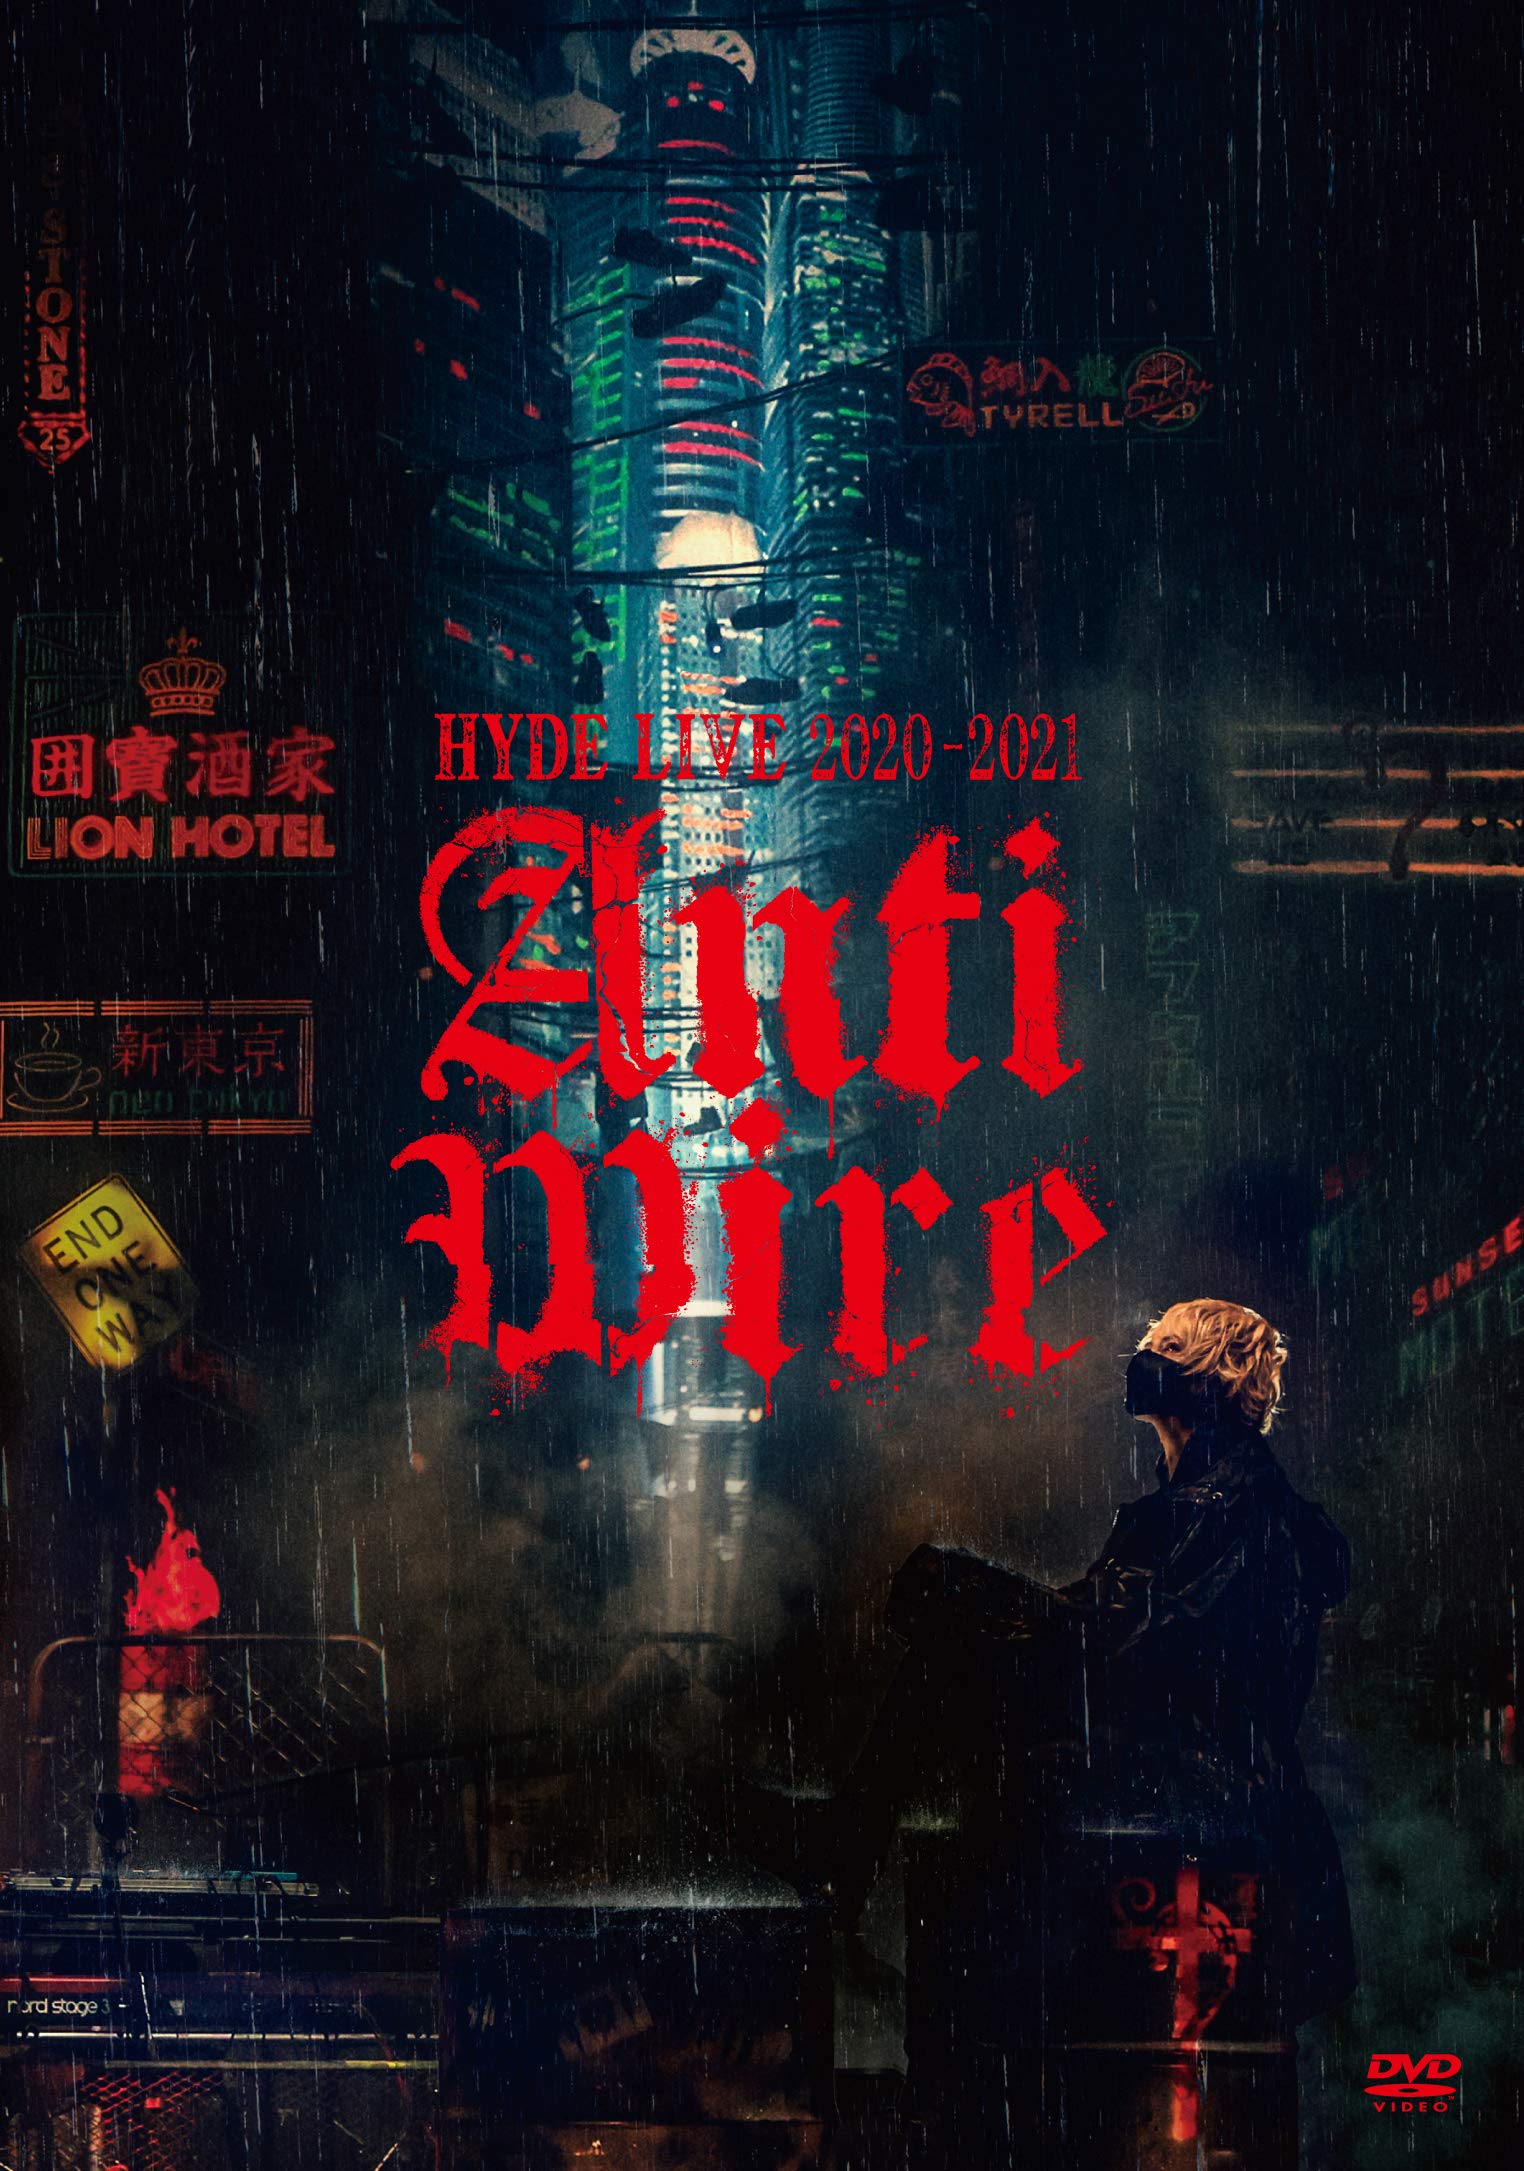 HYDE LIVE 2020-2021 ANTI WIRE (通常盤)[DVD]